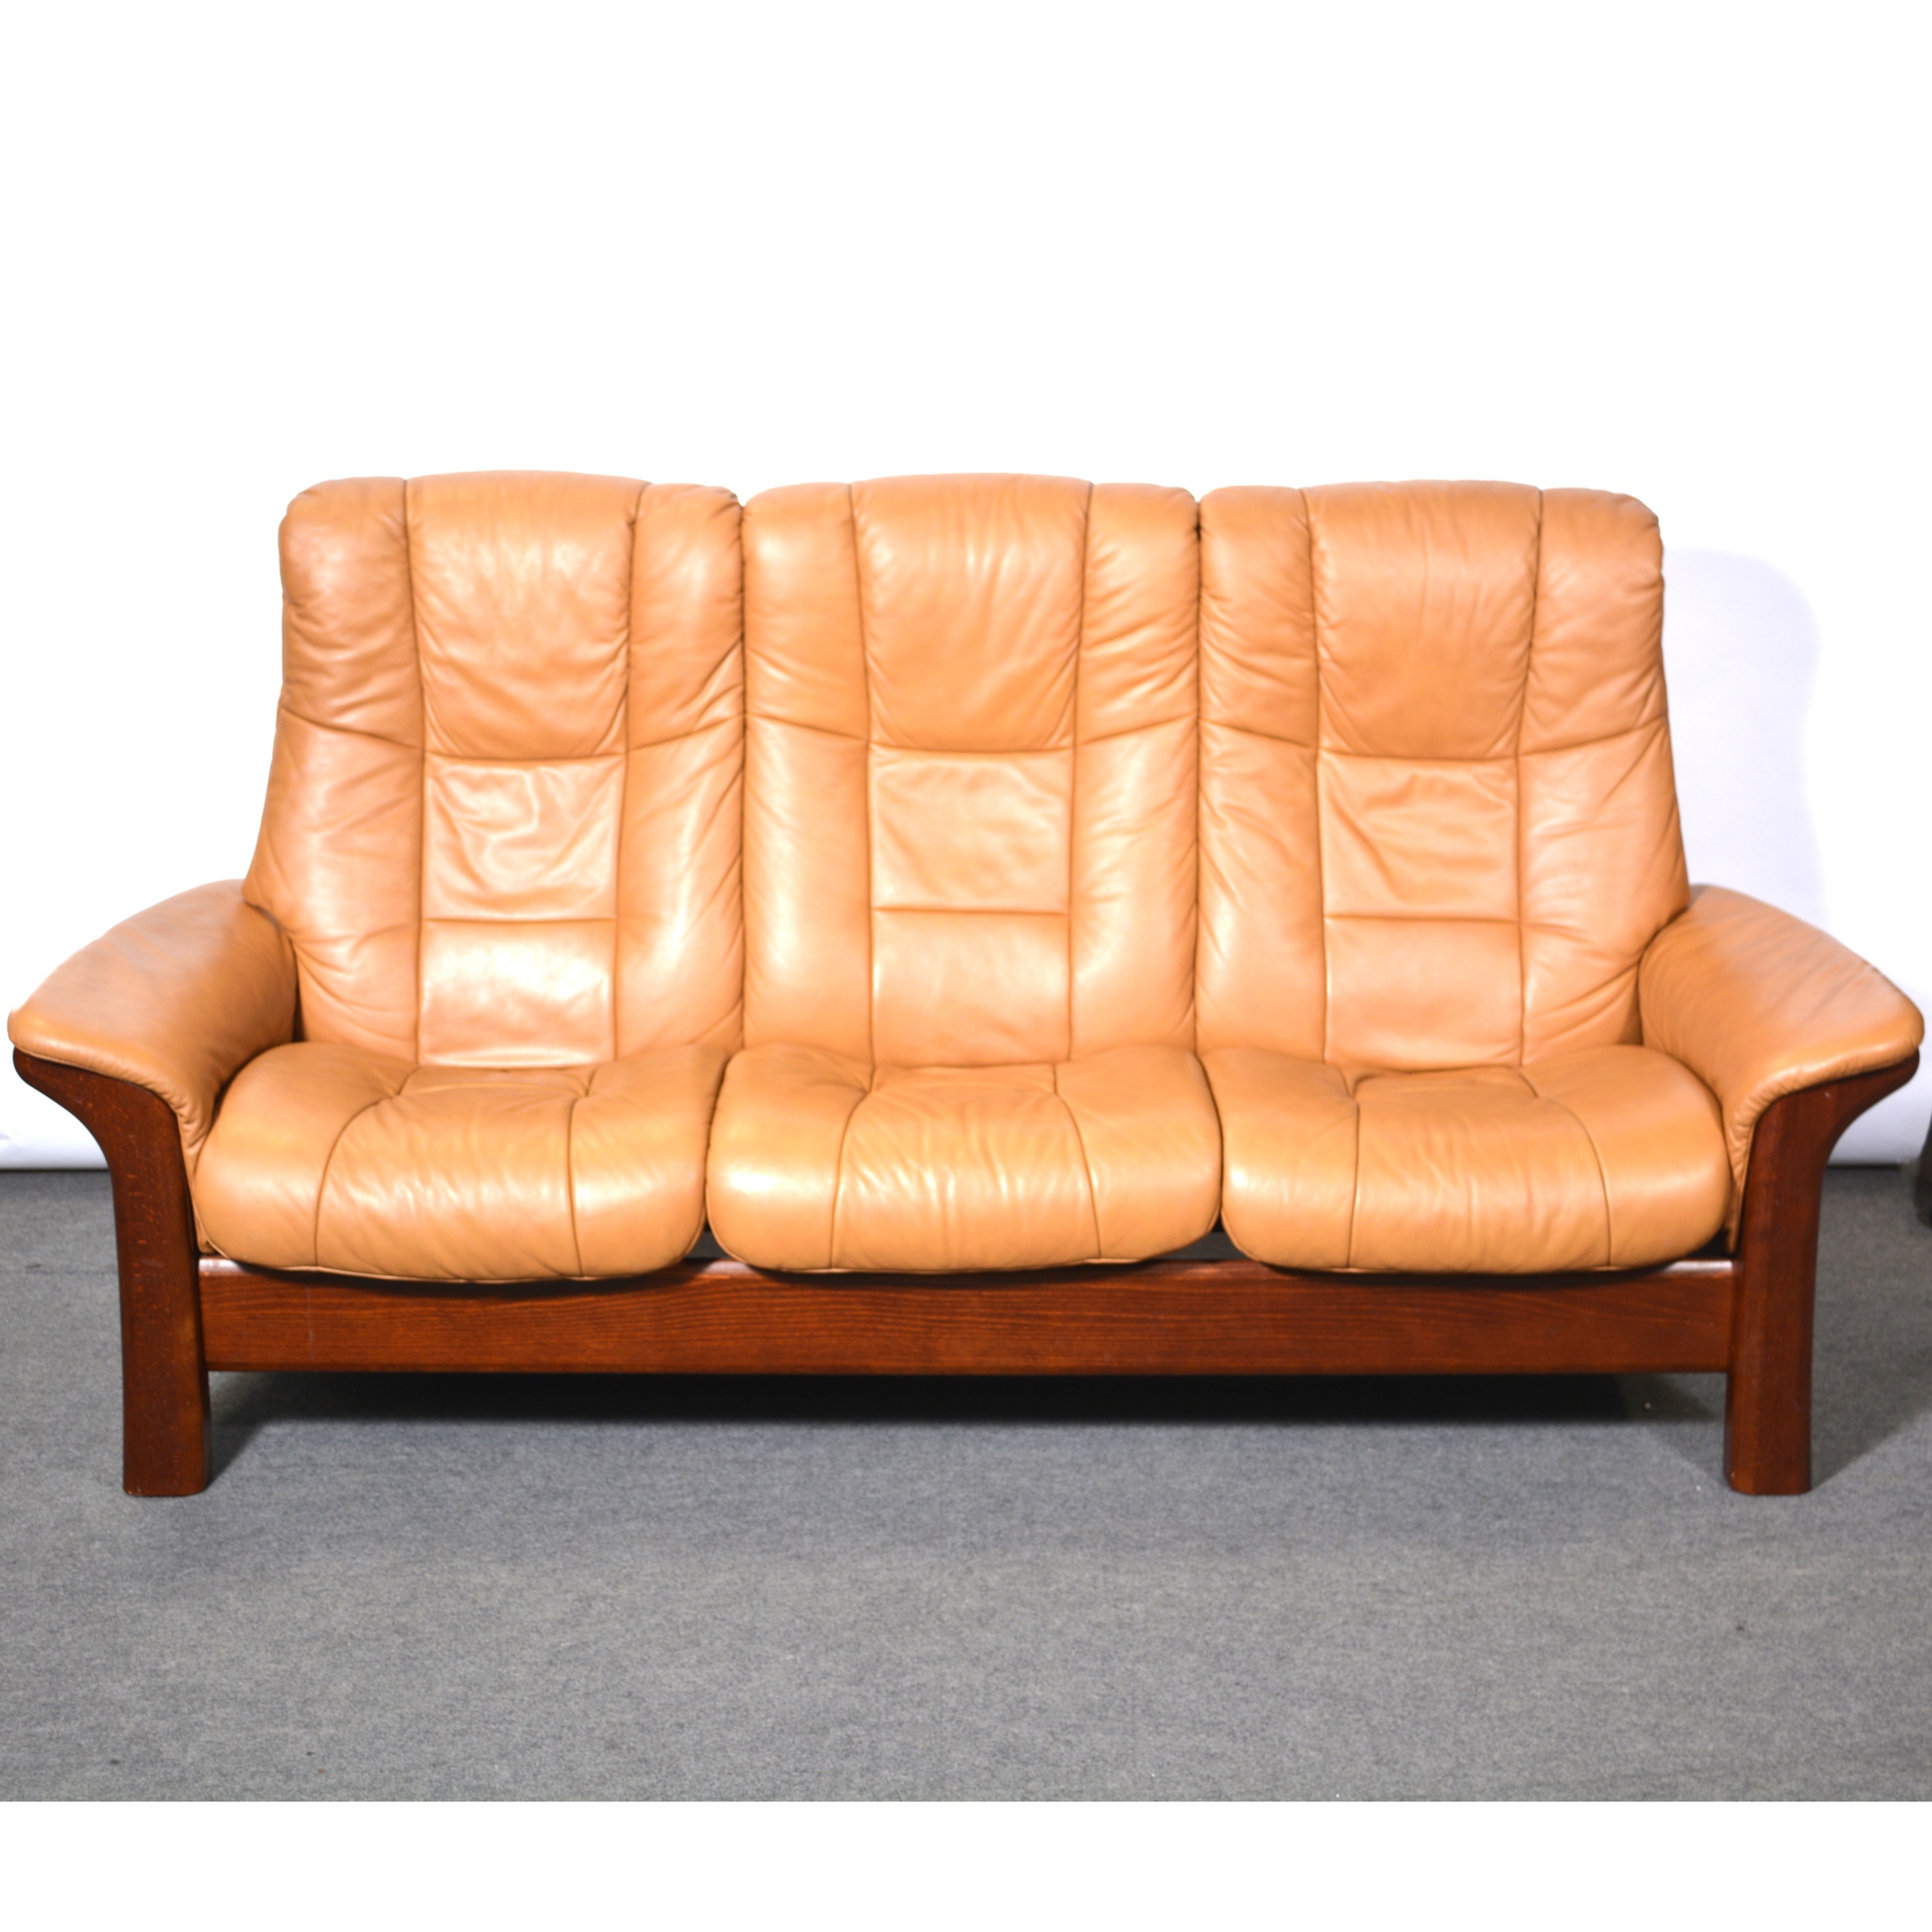 Stressless tan leather three seat sofa,